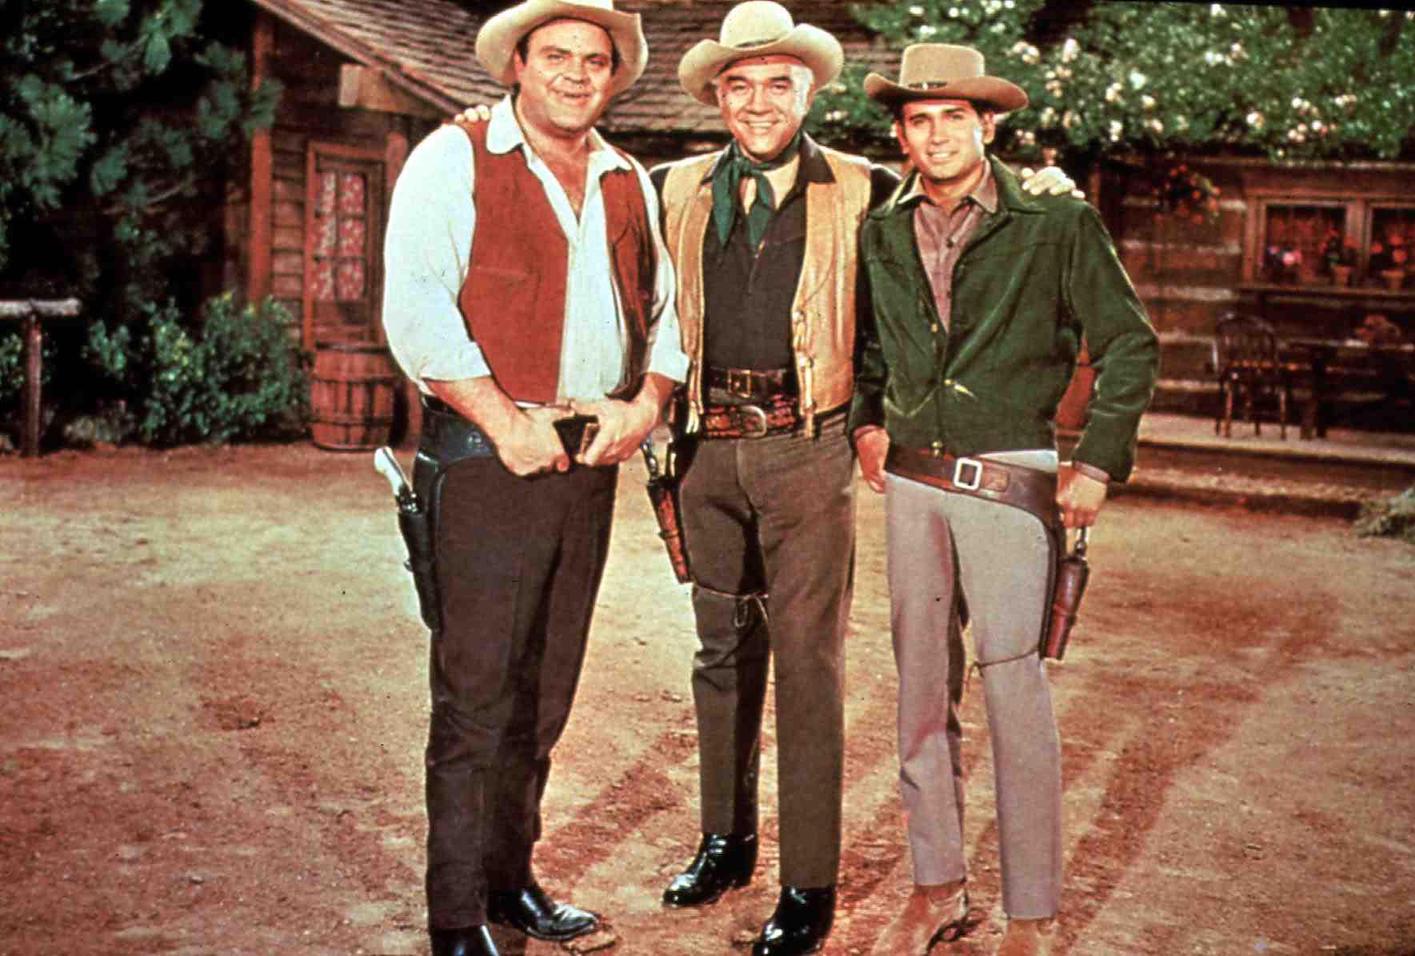 Dan Blocker, Lorne Greene, and Michael Landon in Western clothing standing together in 'Bonanza'